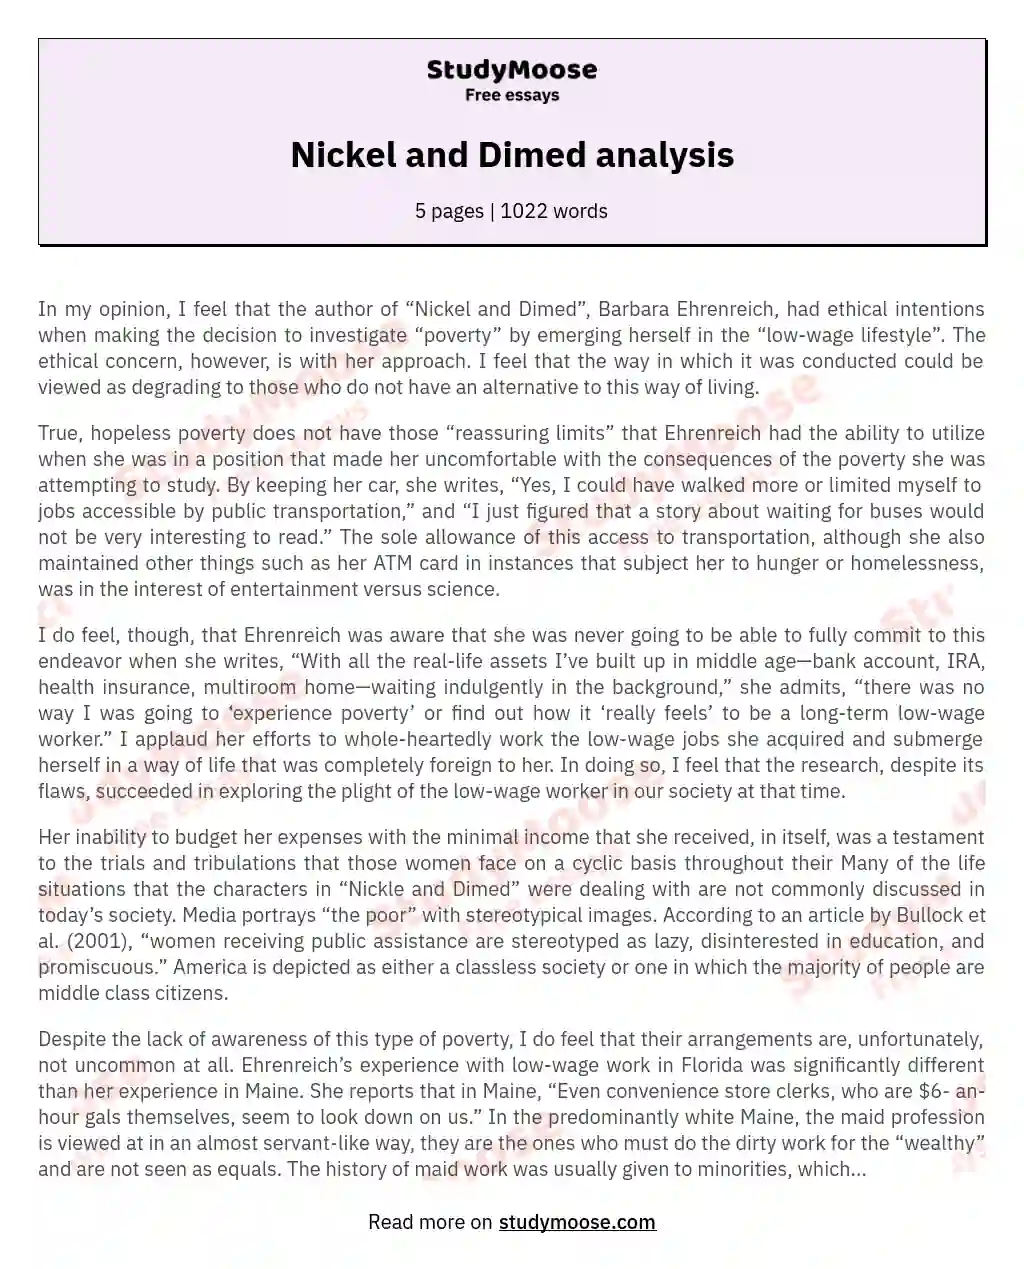 nickel and dimed rhetorical analysis essay